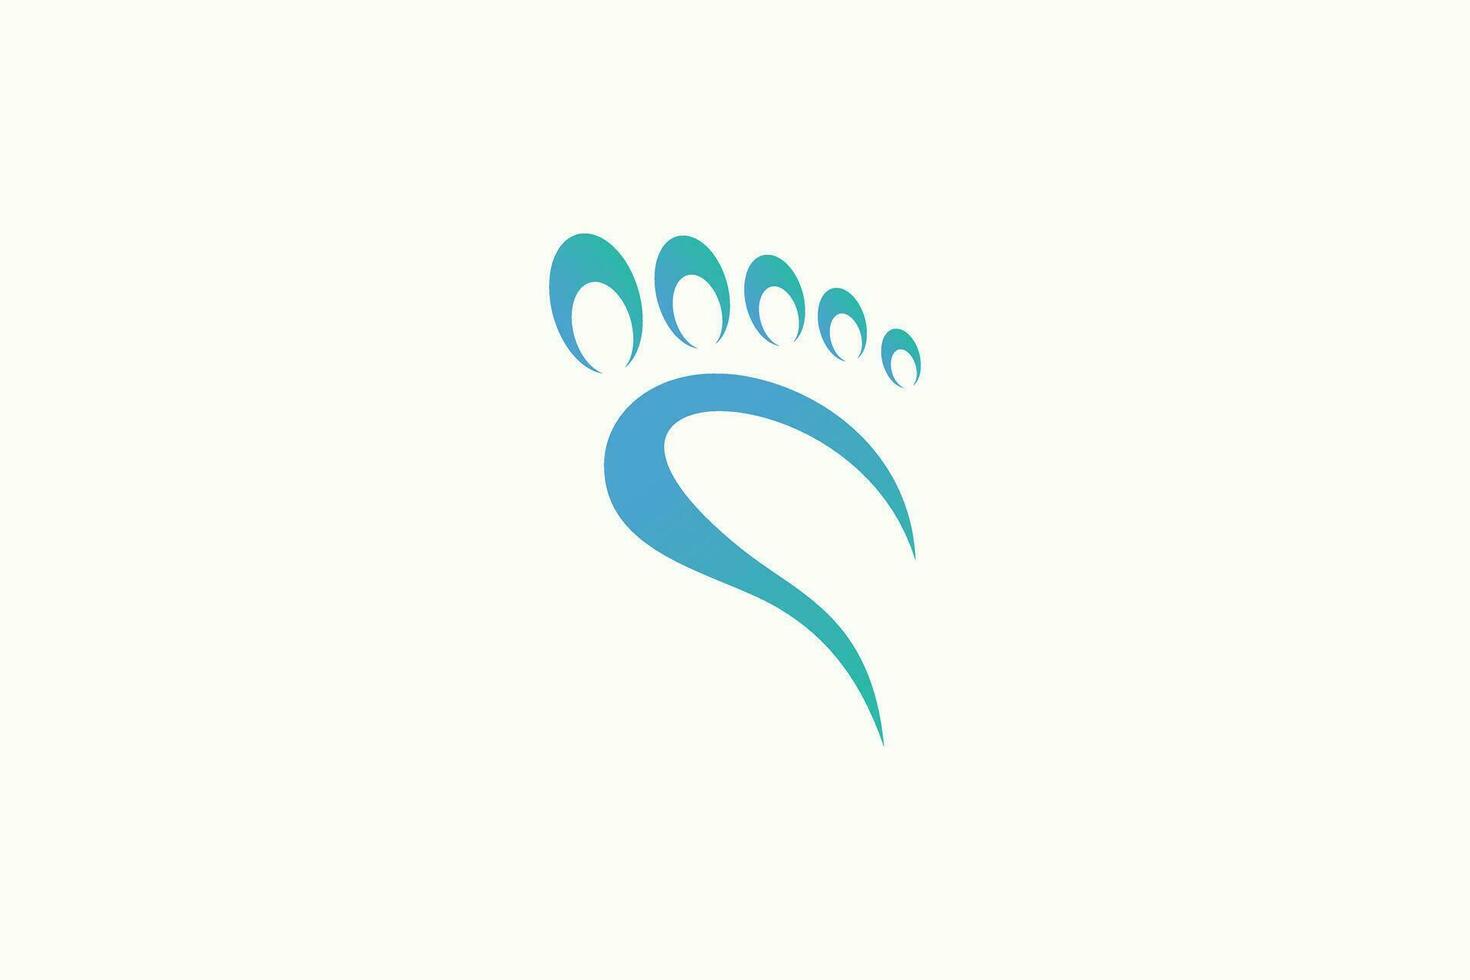 Foot  logo design health illustration woman pedicure salon and clinic premium vector